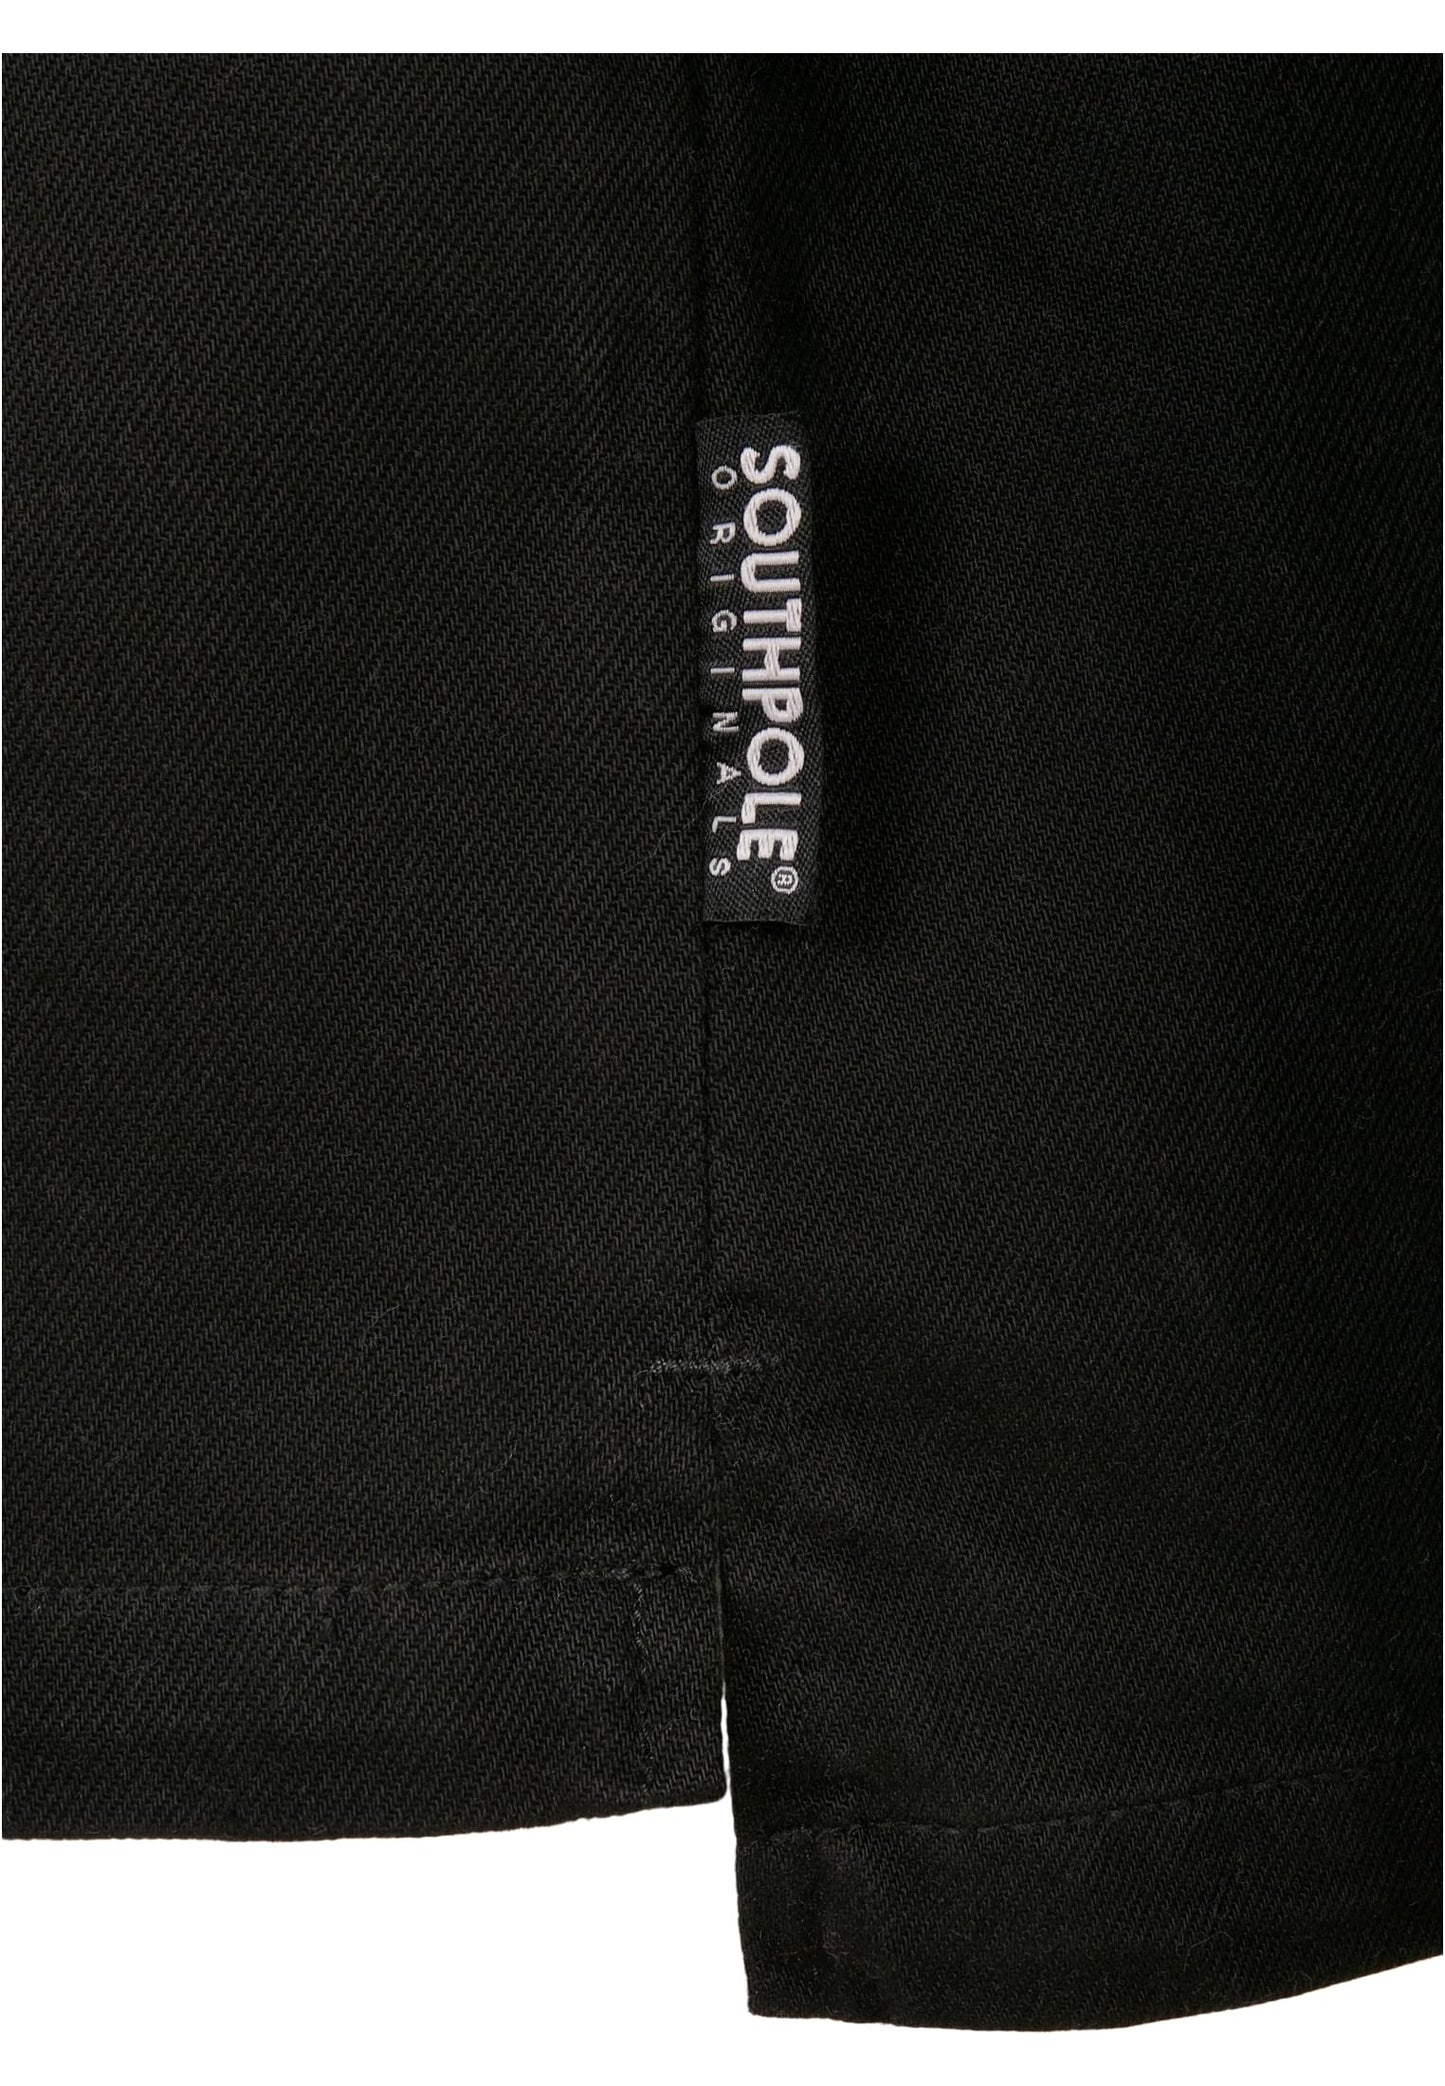 Southpole Oversized Cotton Shirt, Black